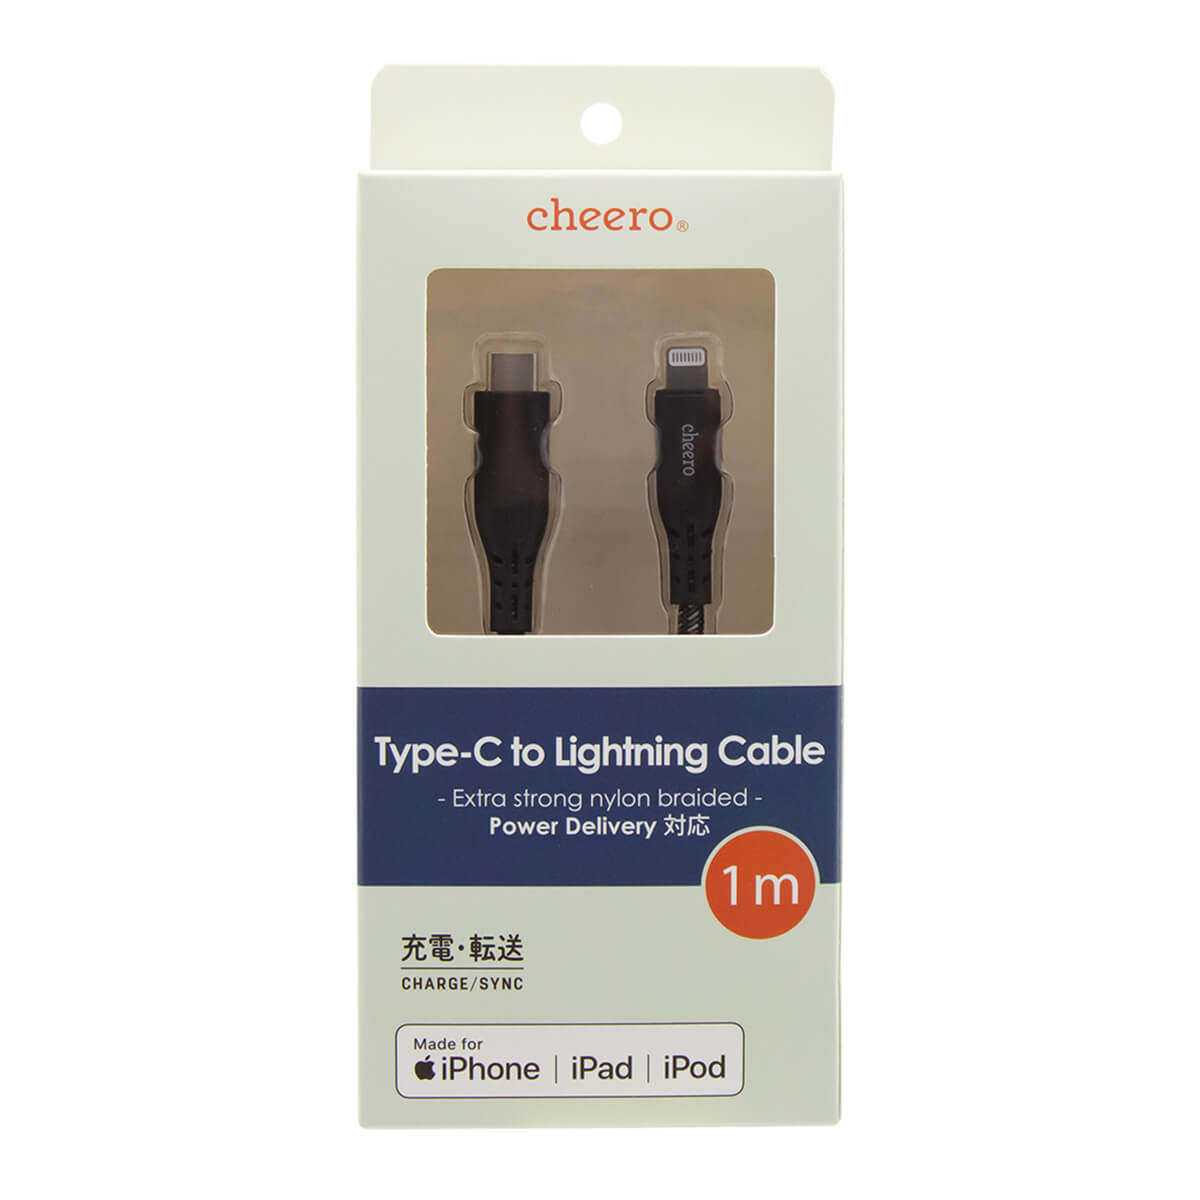 cheero Type-C to Lightning Cable